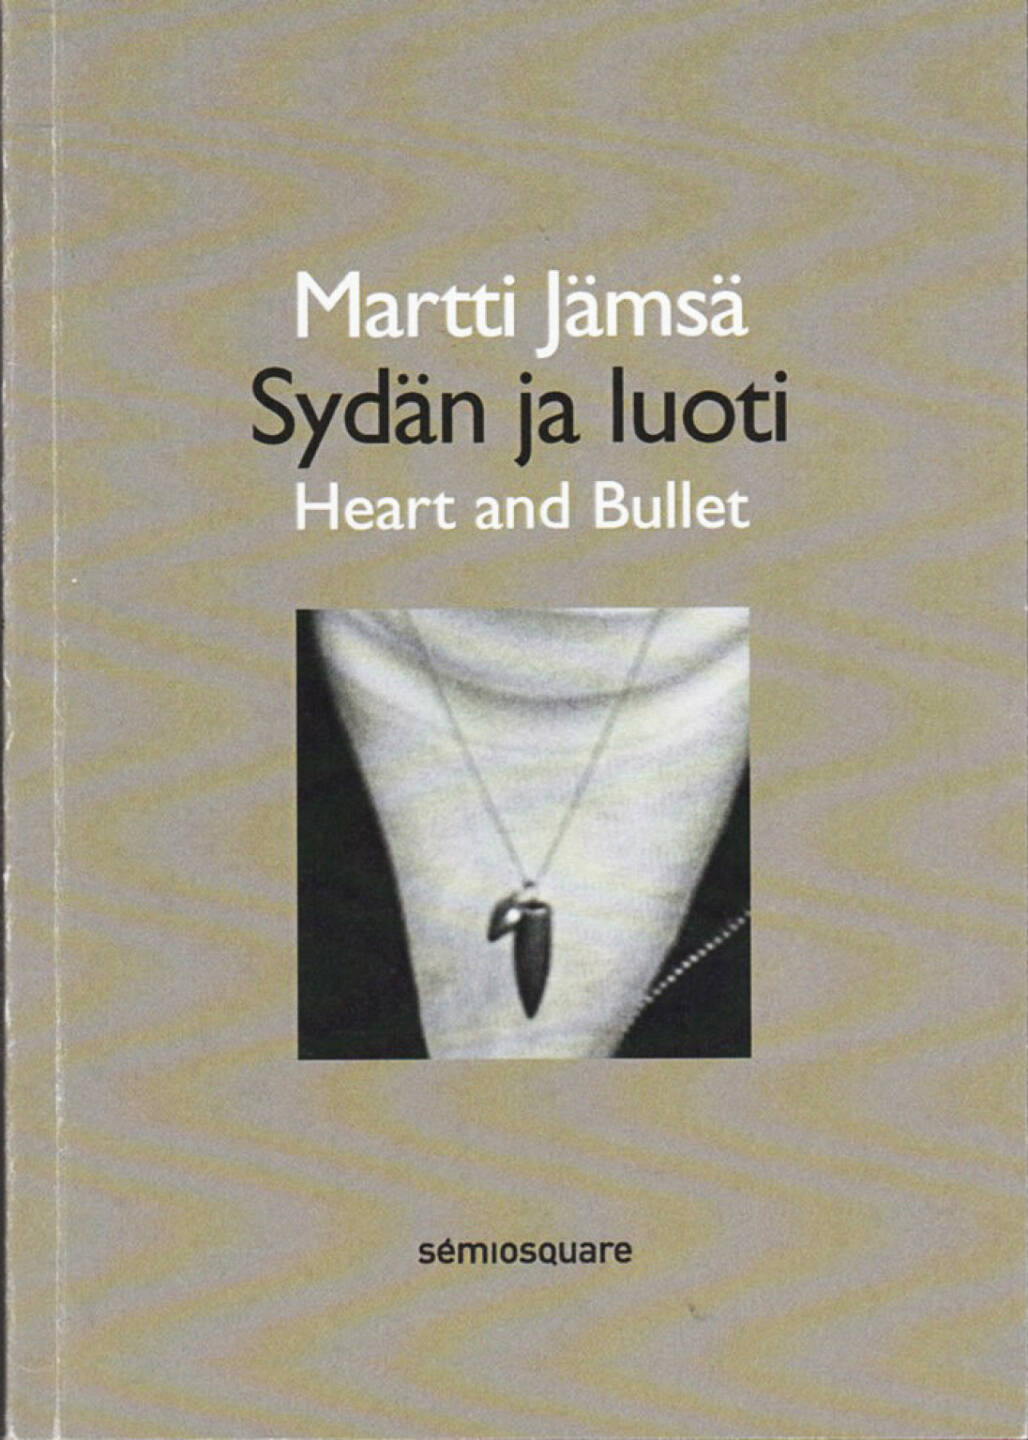 Martti Jämsä - Heart and Bullet, Semiosquare 2014, Cover  - http://josefchladek.com/book/martti_jamsa_-_heart_and_bullet